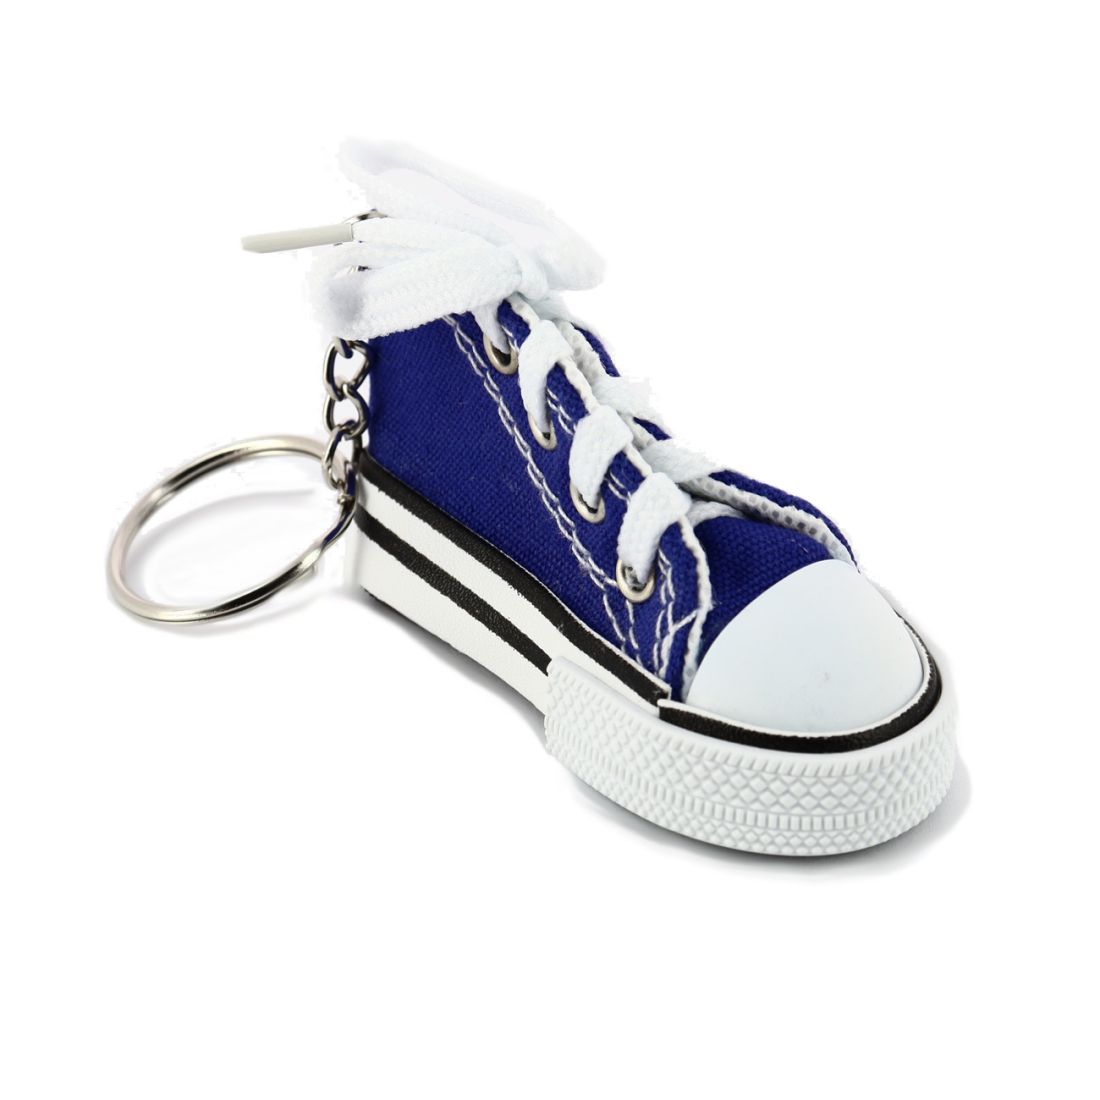 Porte clés chaussure Sneaker Bleu Marine